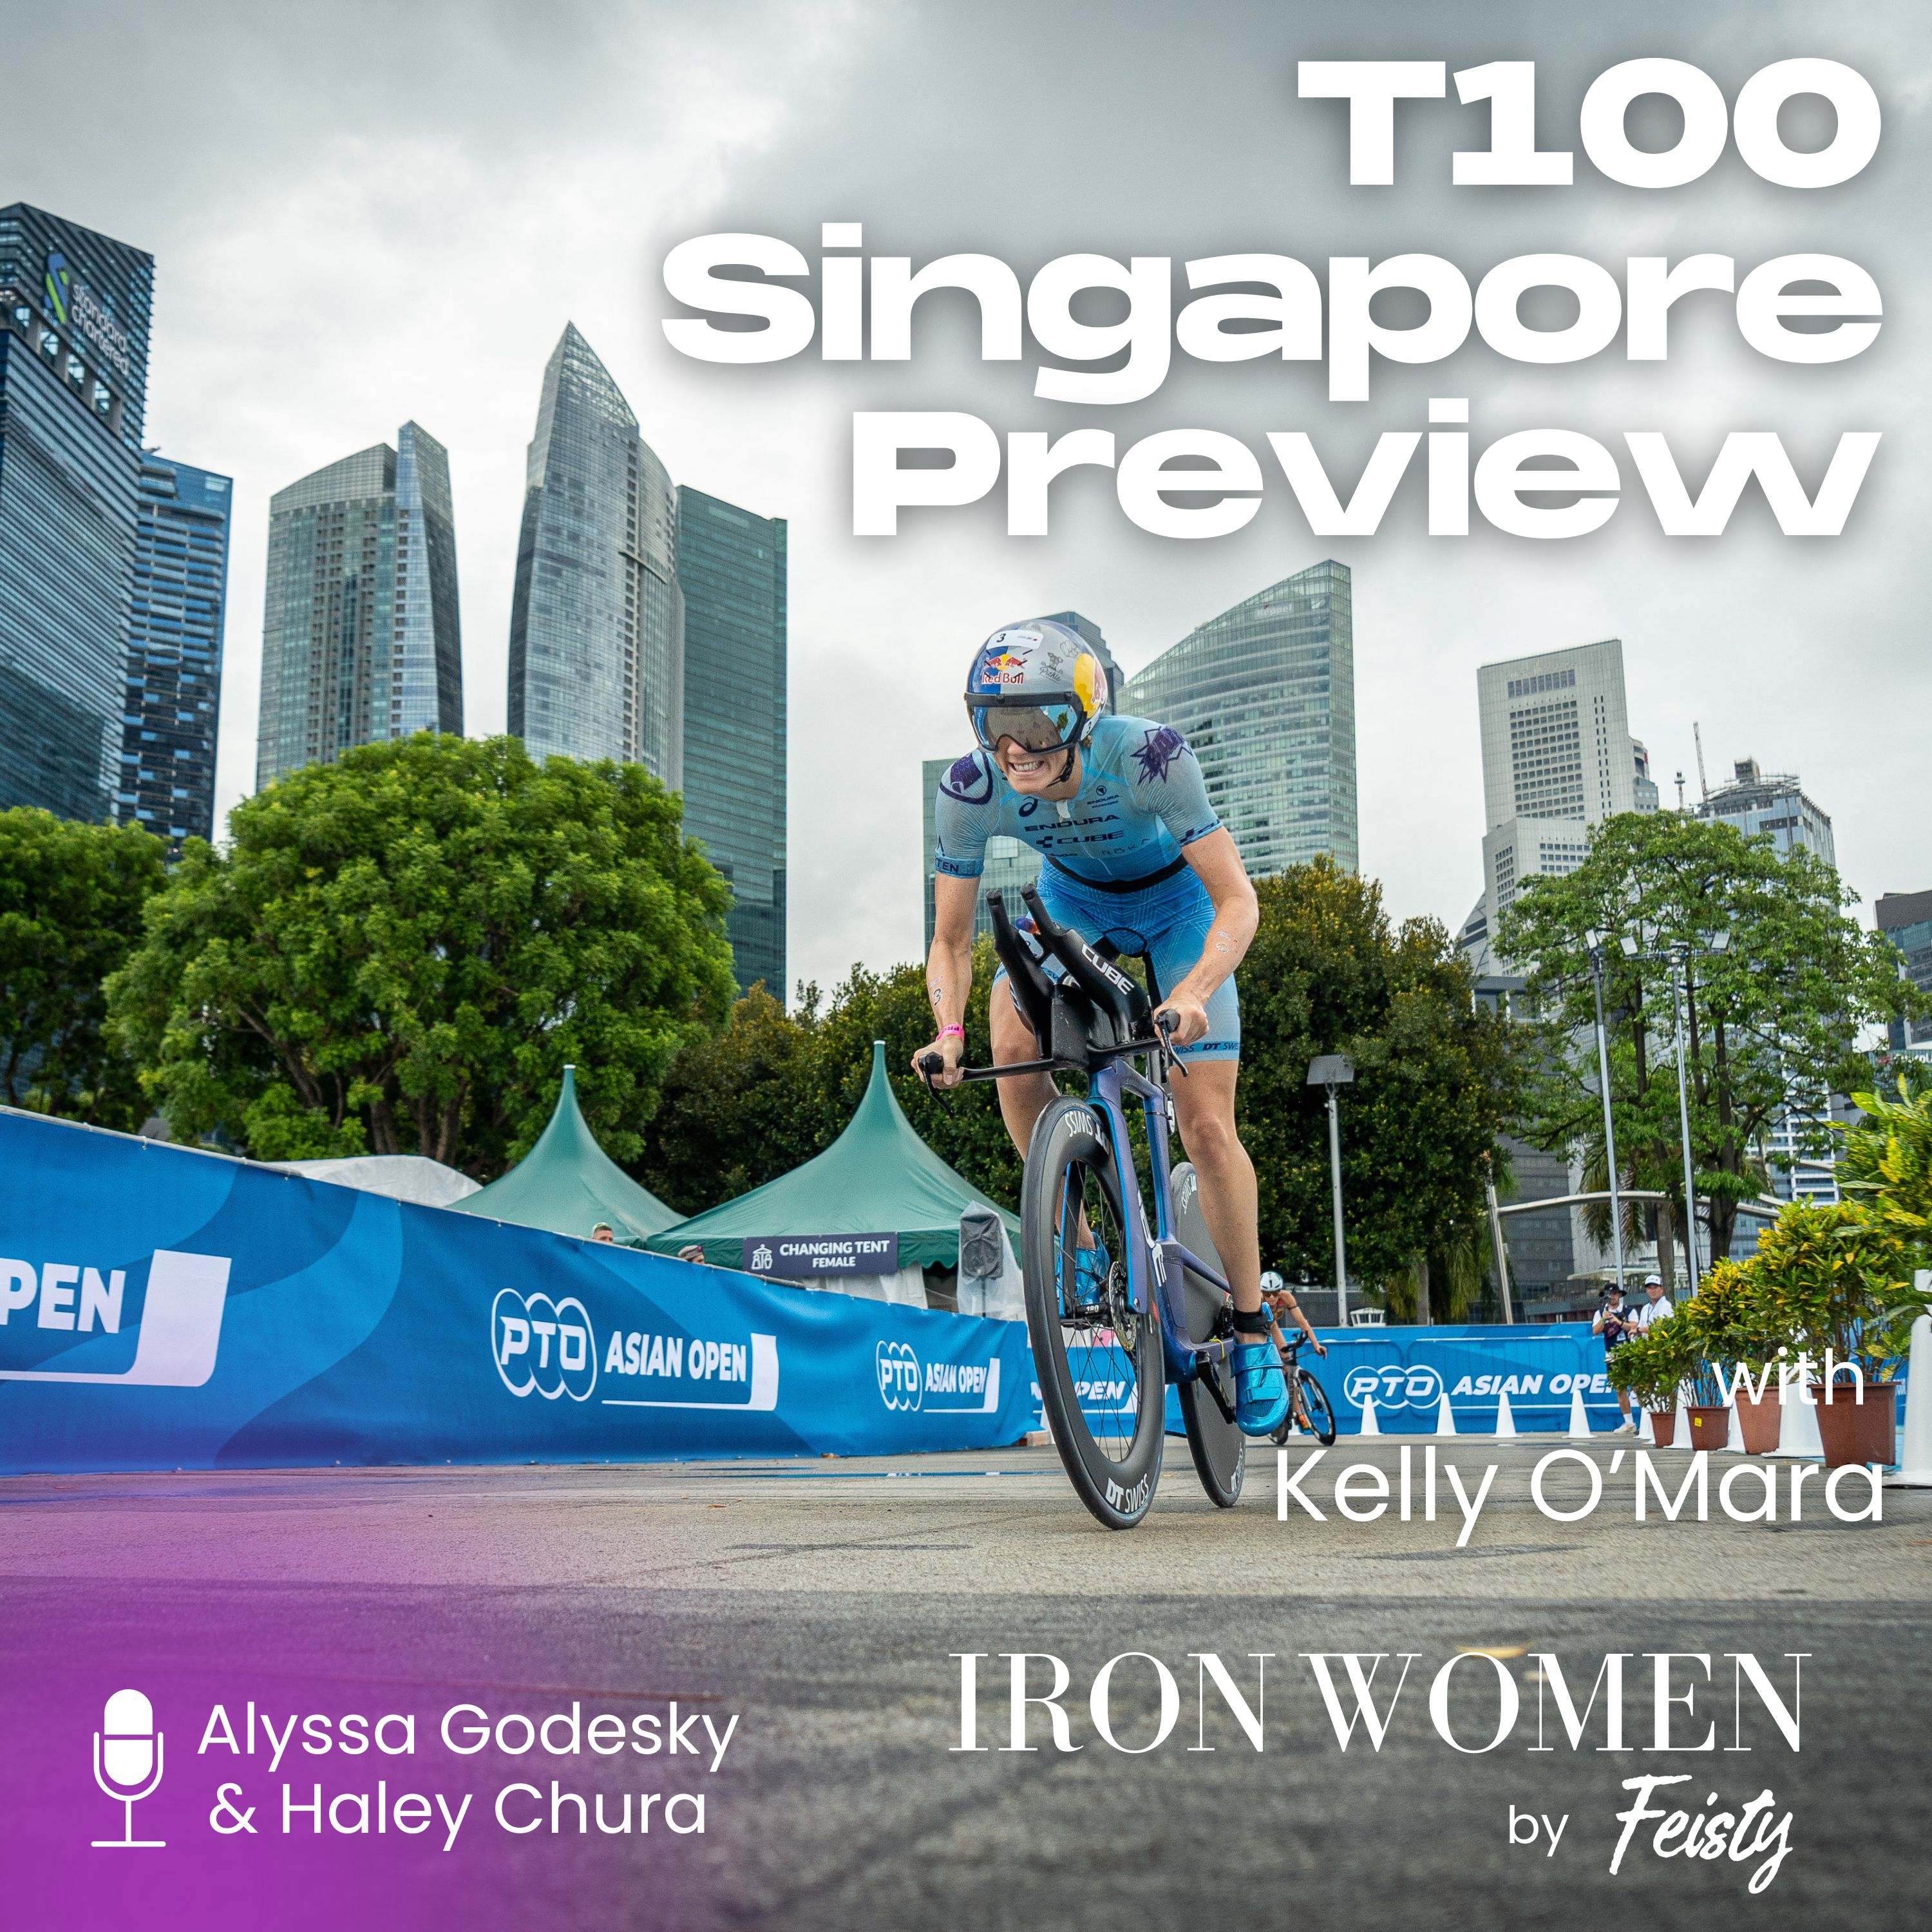 IronWomen - T100 Singapore Preview with Kelly O’Mara